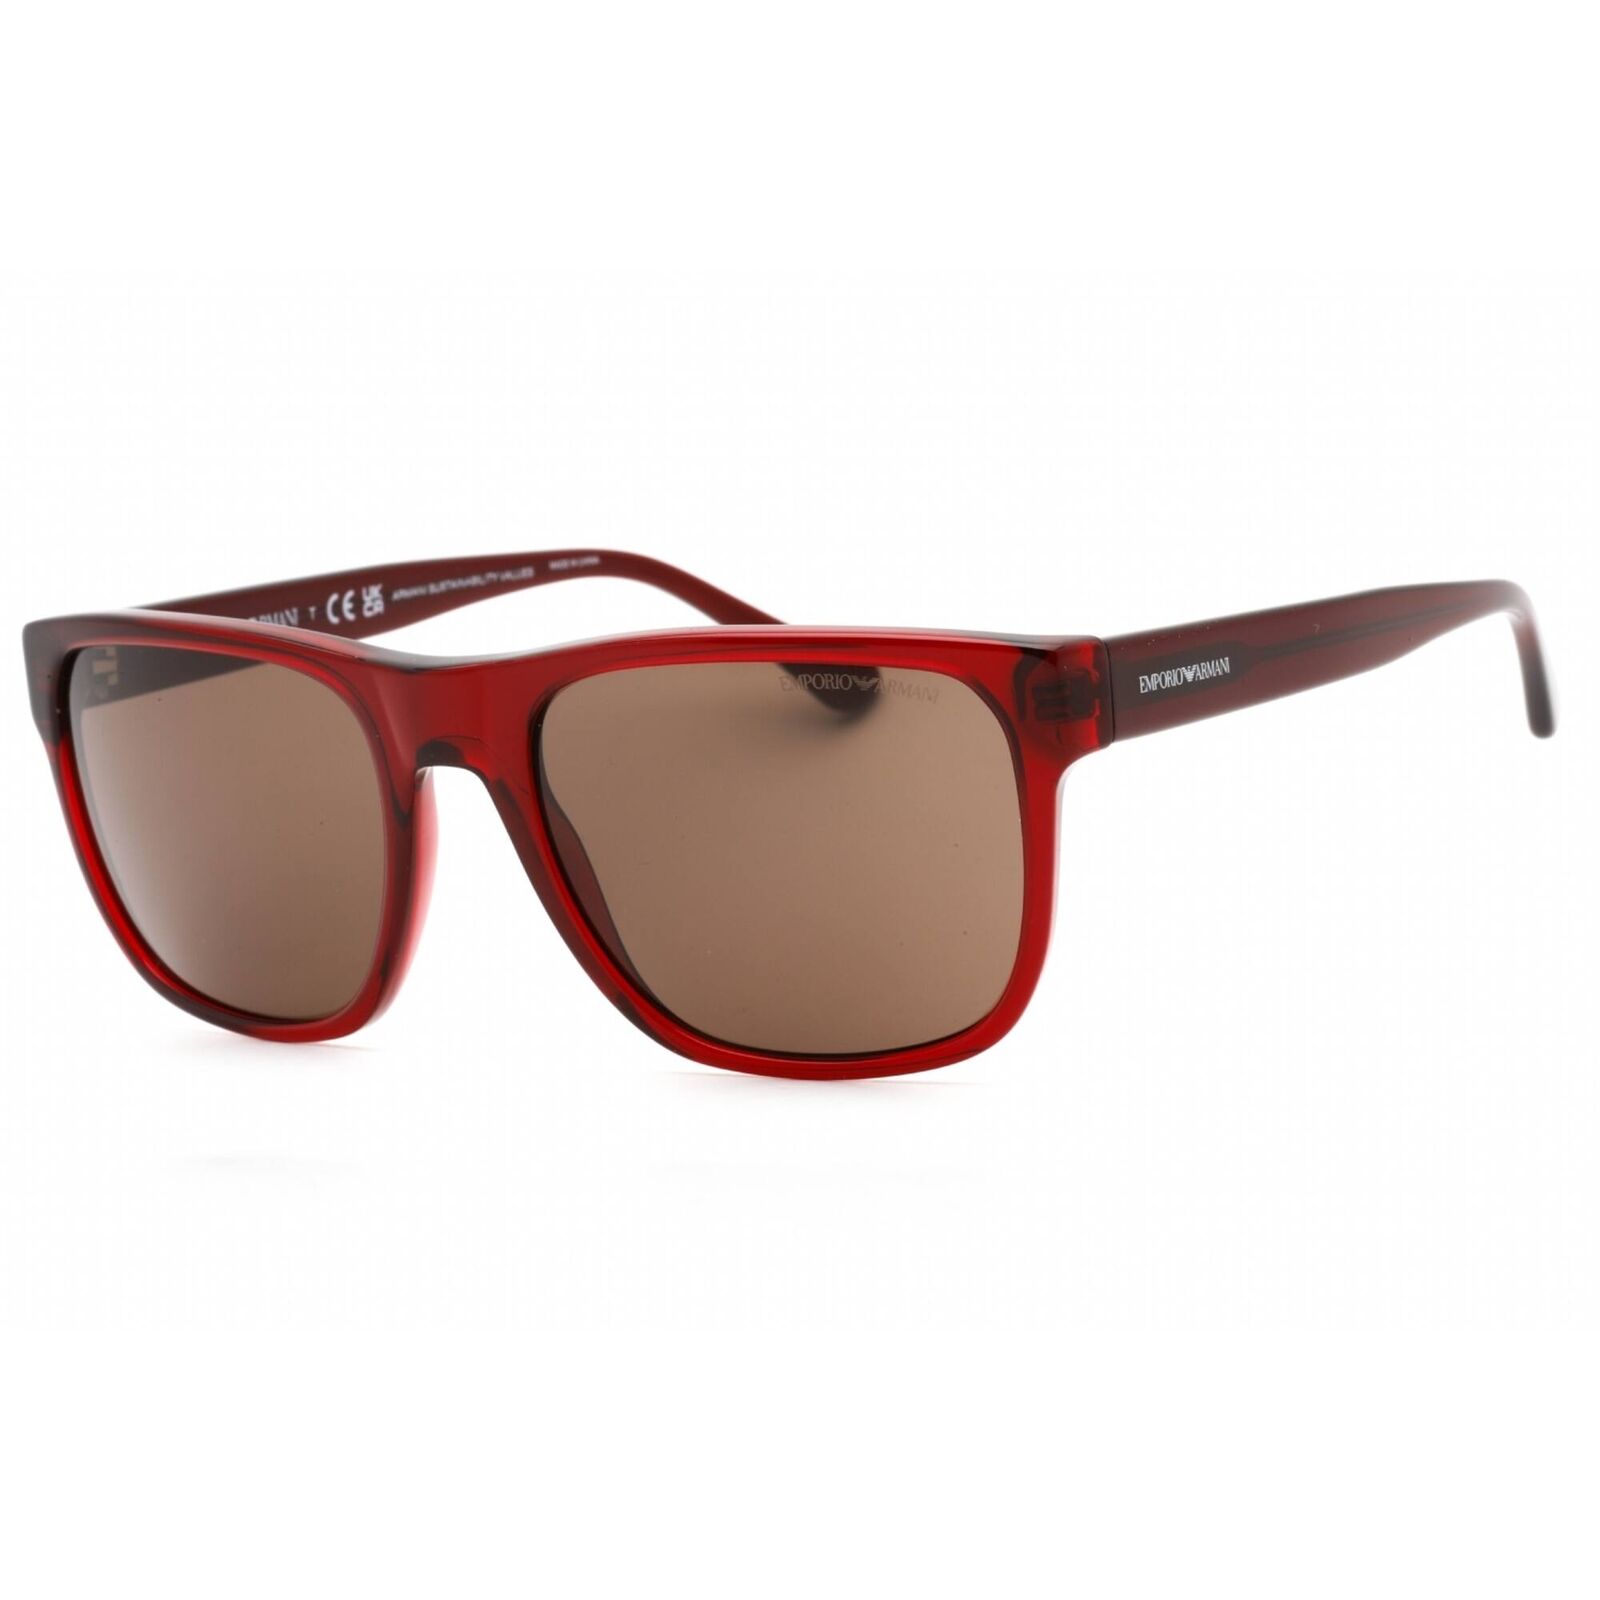 Emporio Armani Men's Sunglasses Transparent Bordeaux Frame 0EA4163 507573 Emporio Armani 0EA4163 507573